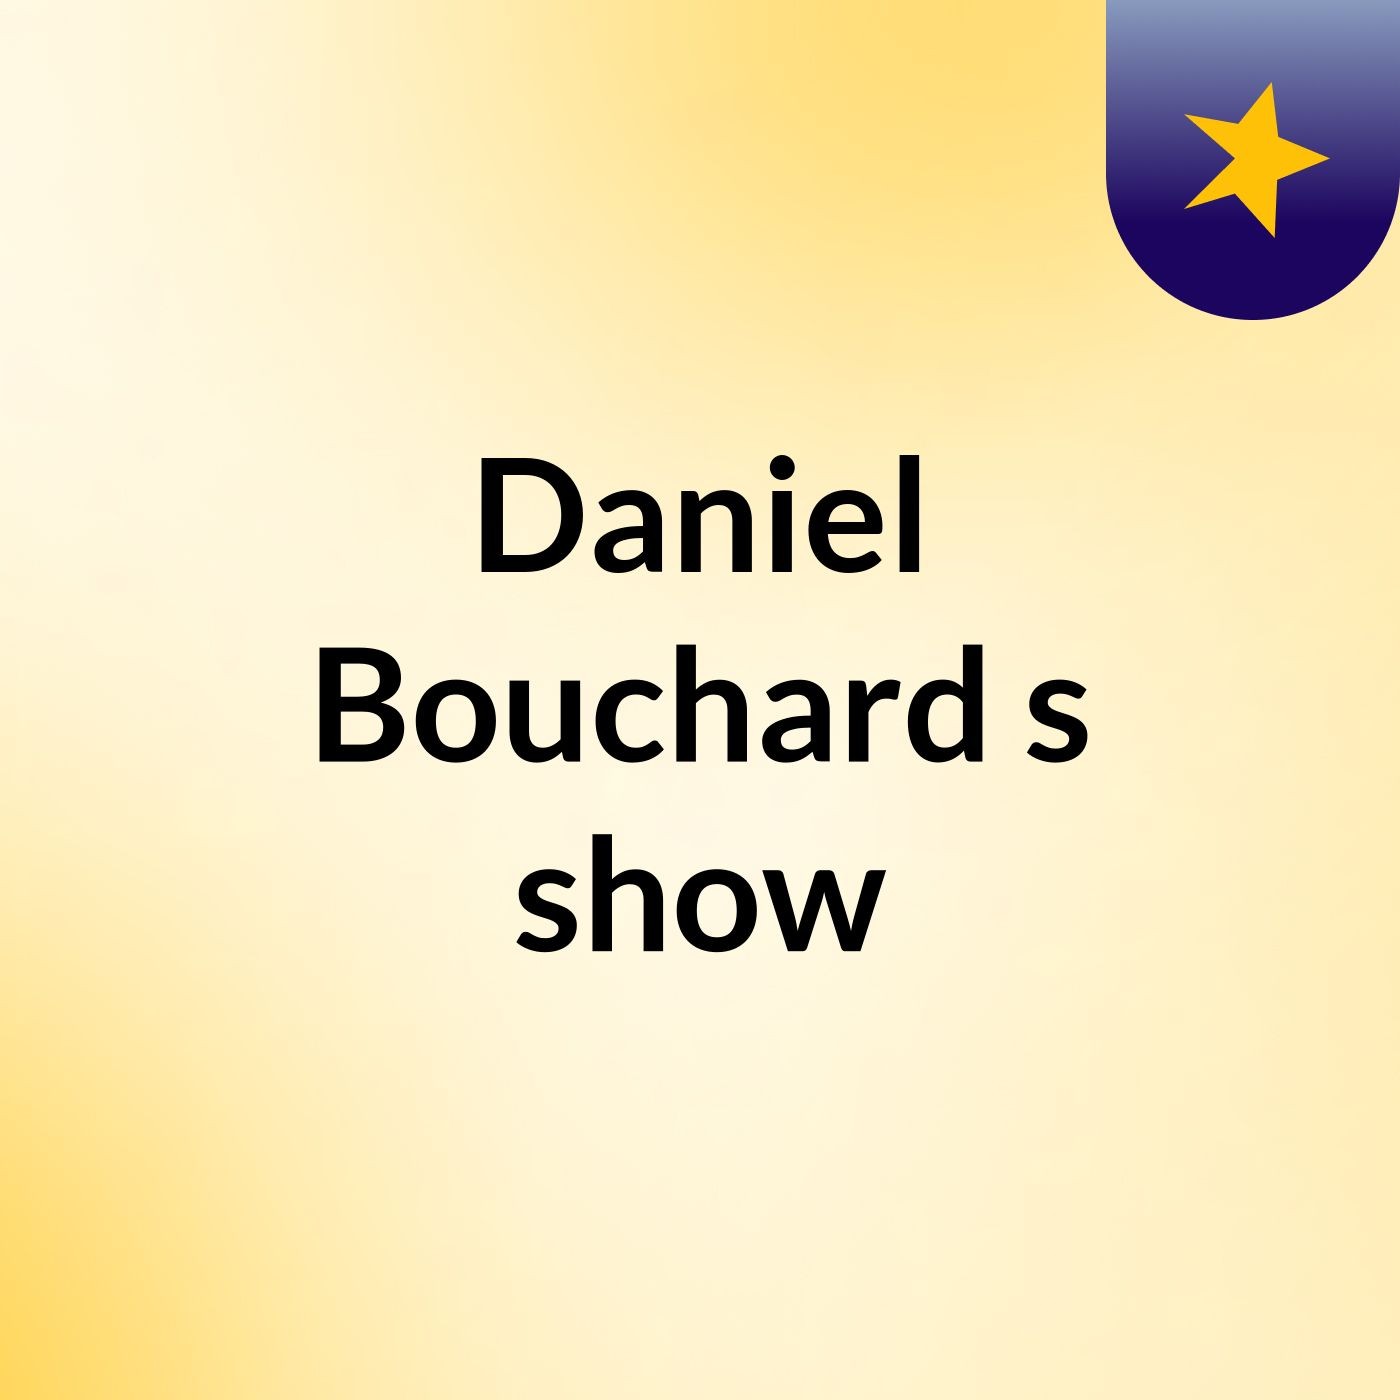 Episode 3 - Daniel Bouchard's show